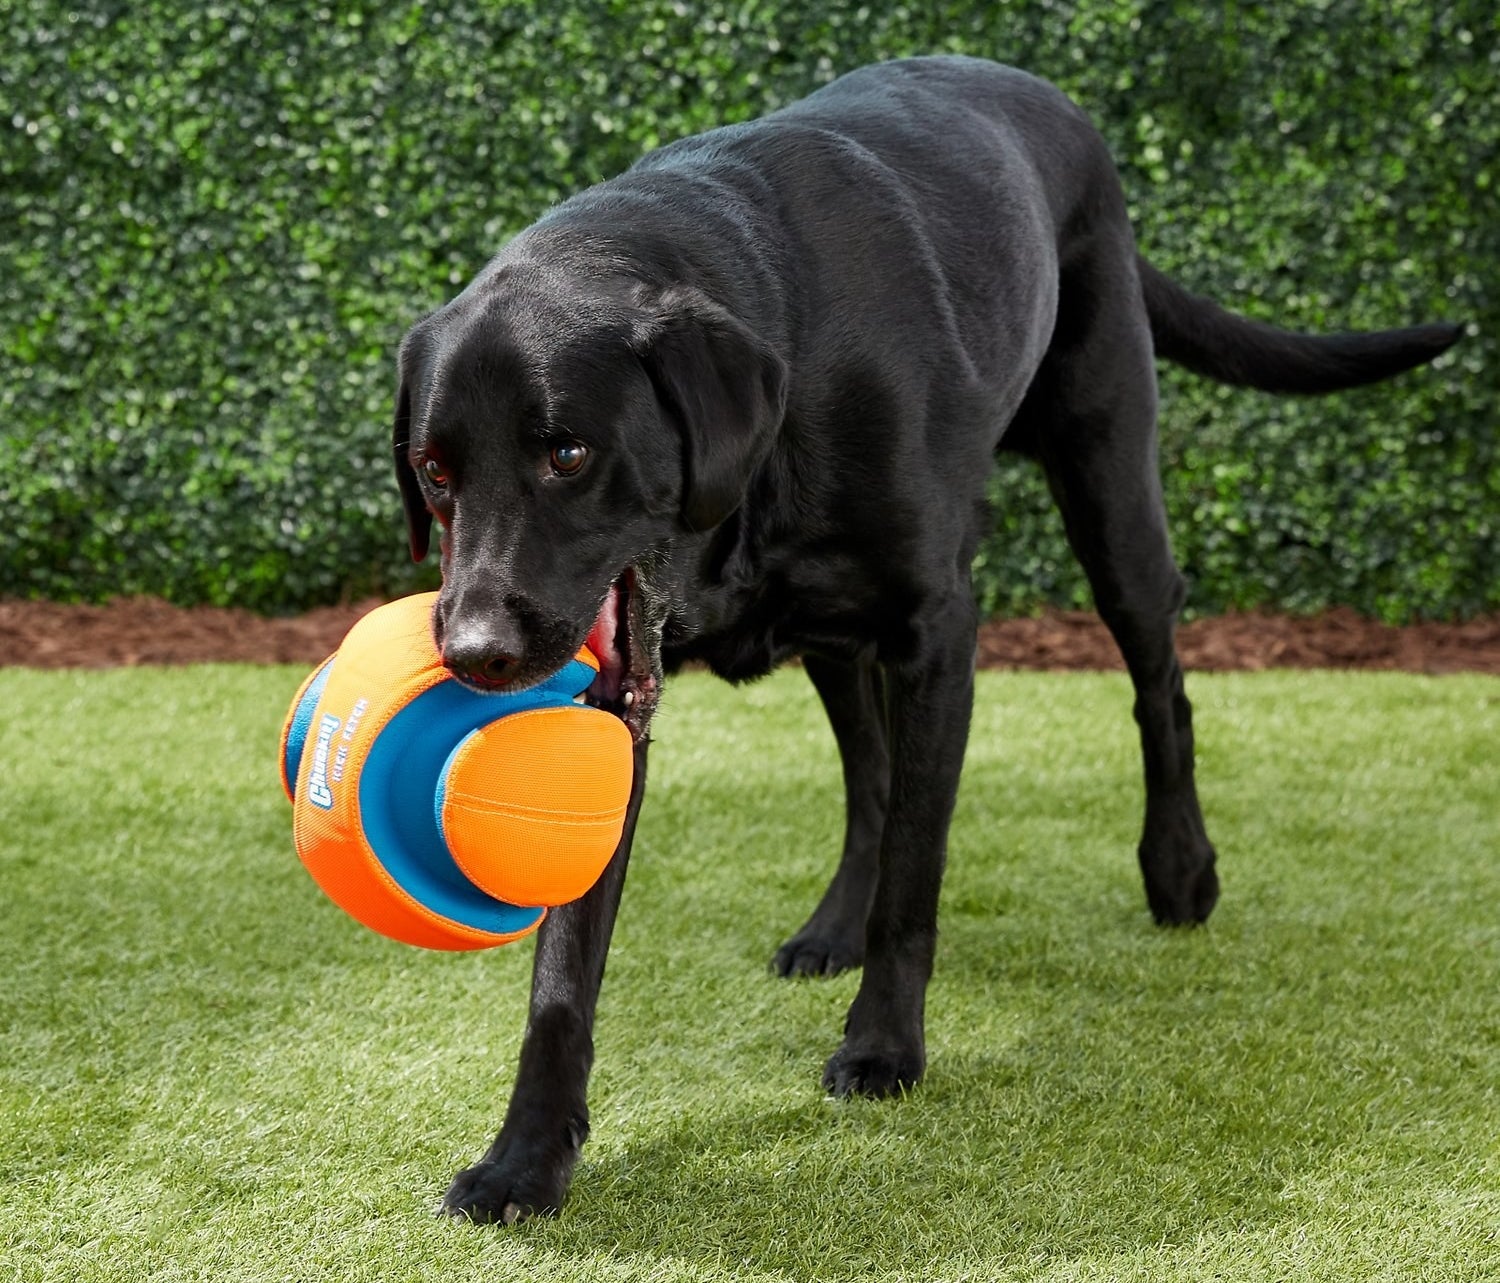 a black dog holding a large orange ball